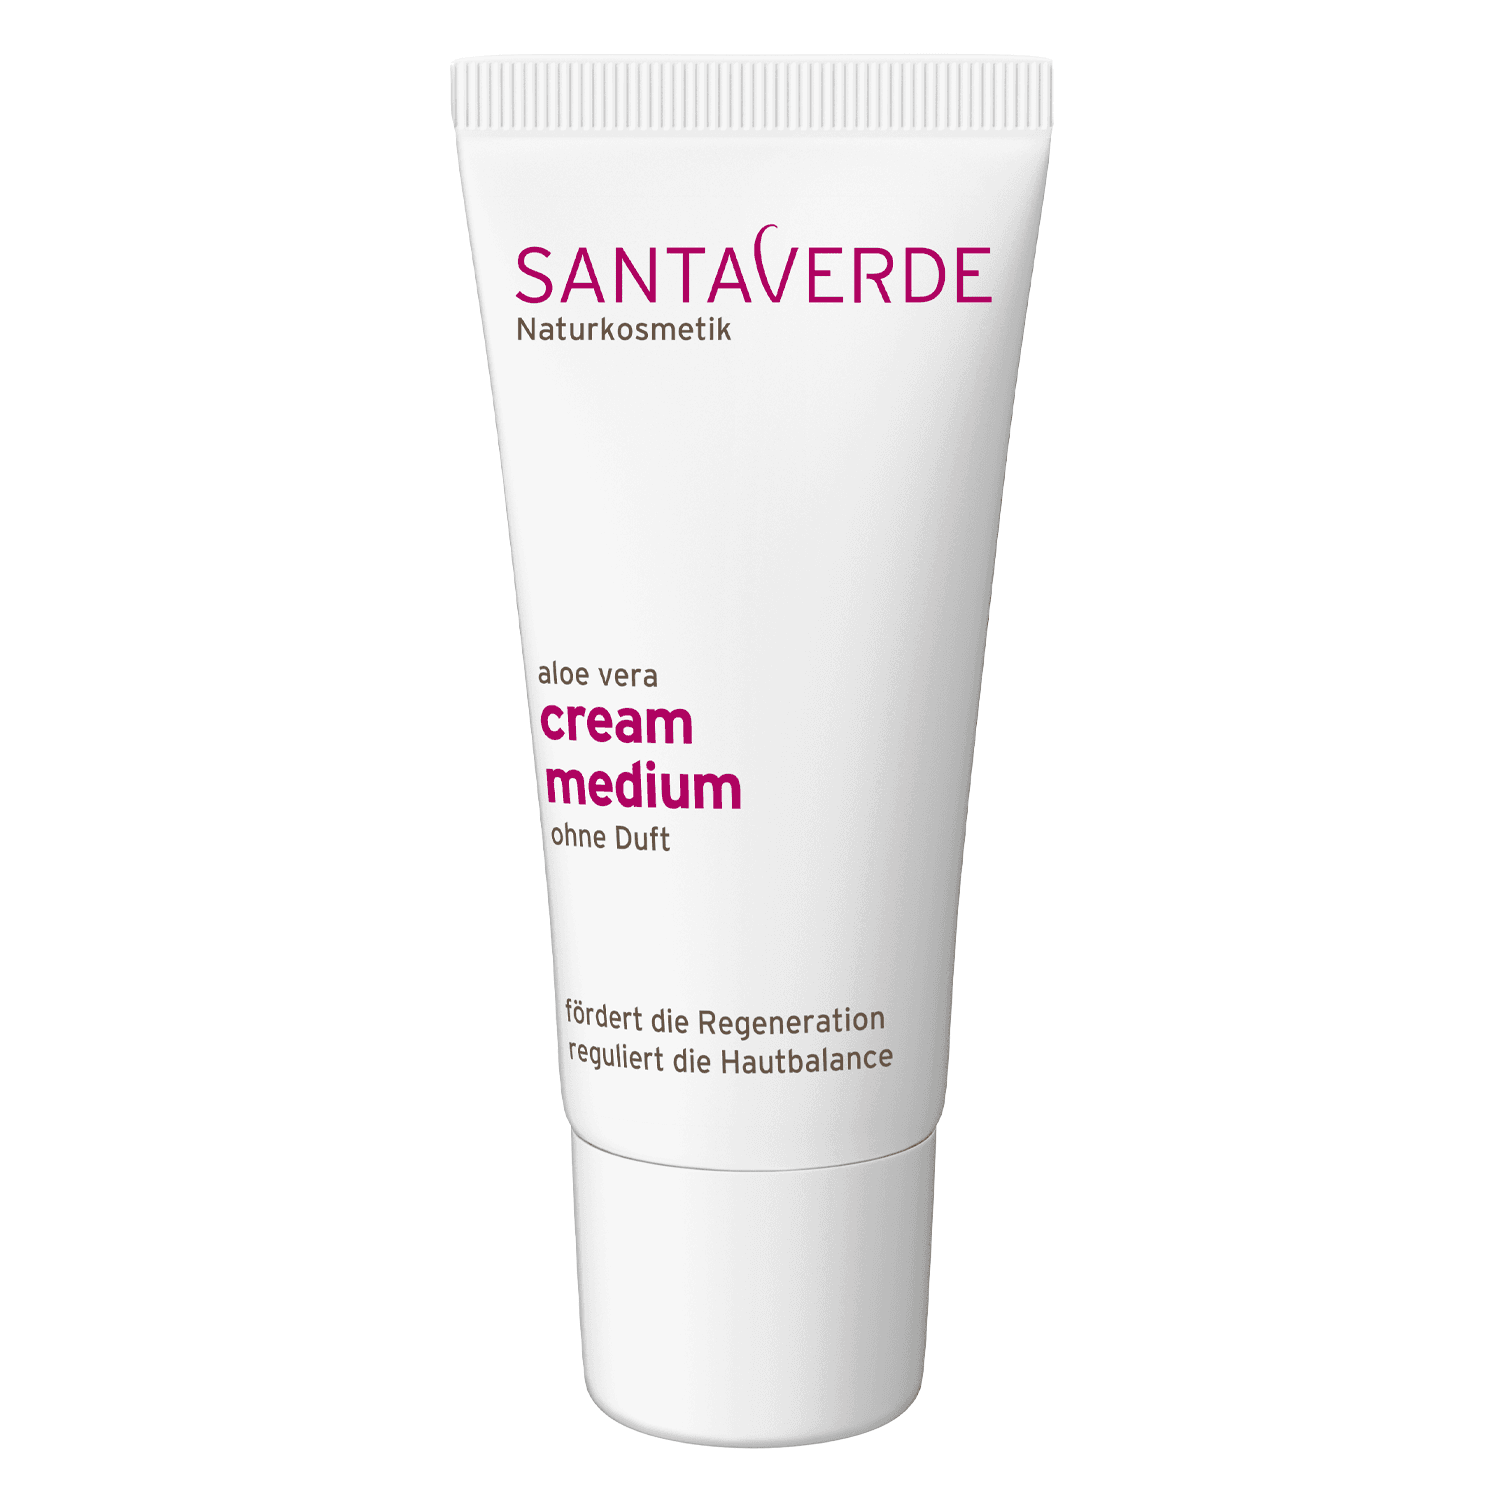 SANTAVERDE - aloe vera cream medium without fragrance